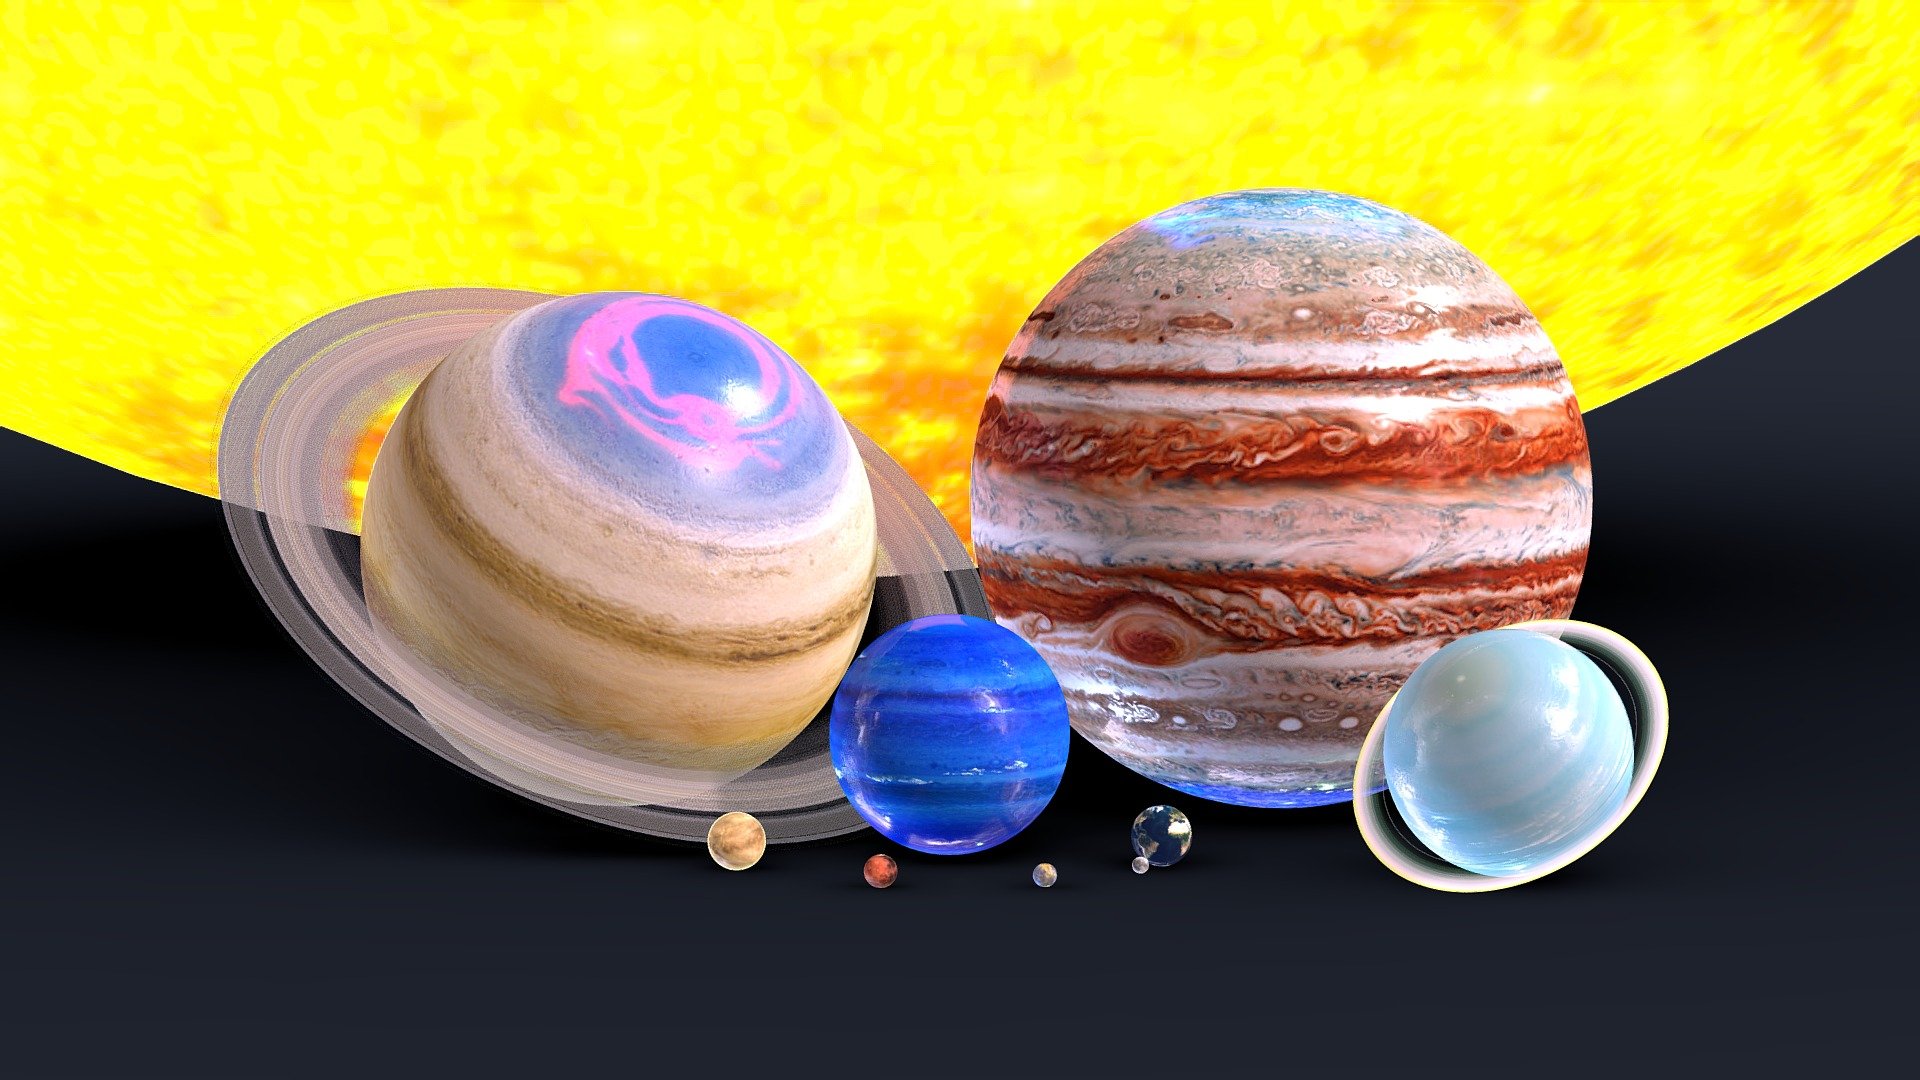 solar system 3d model scale by distance blender download